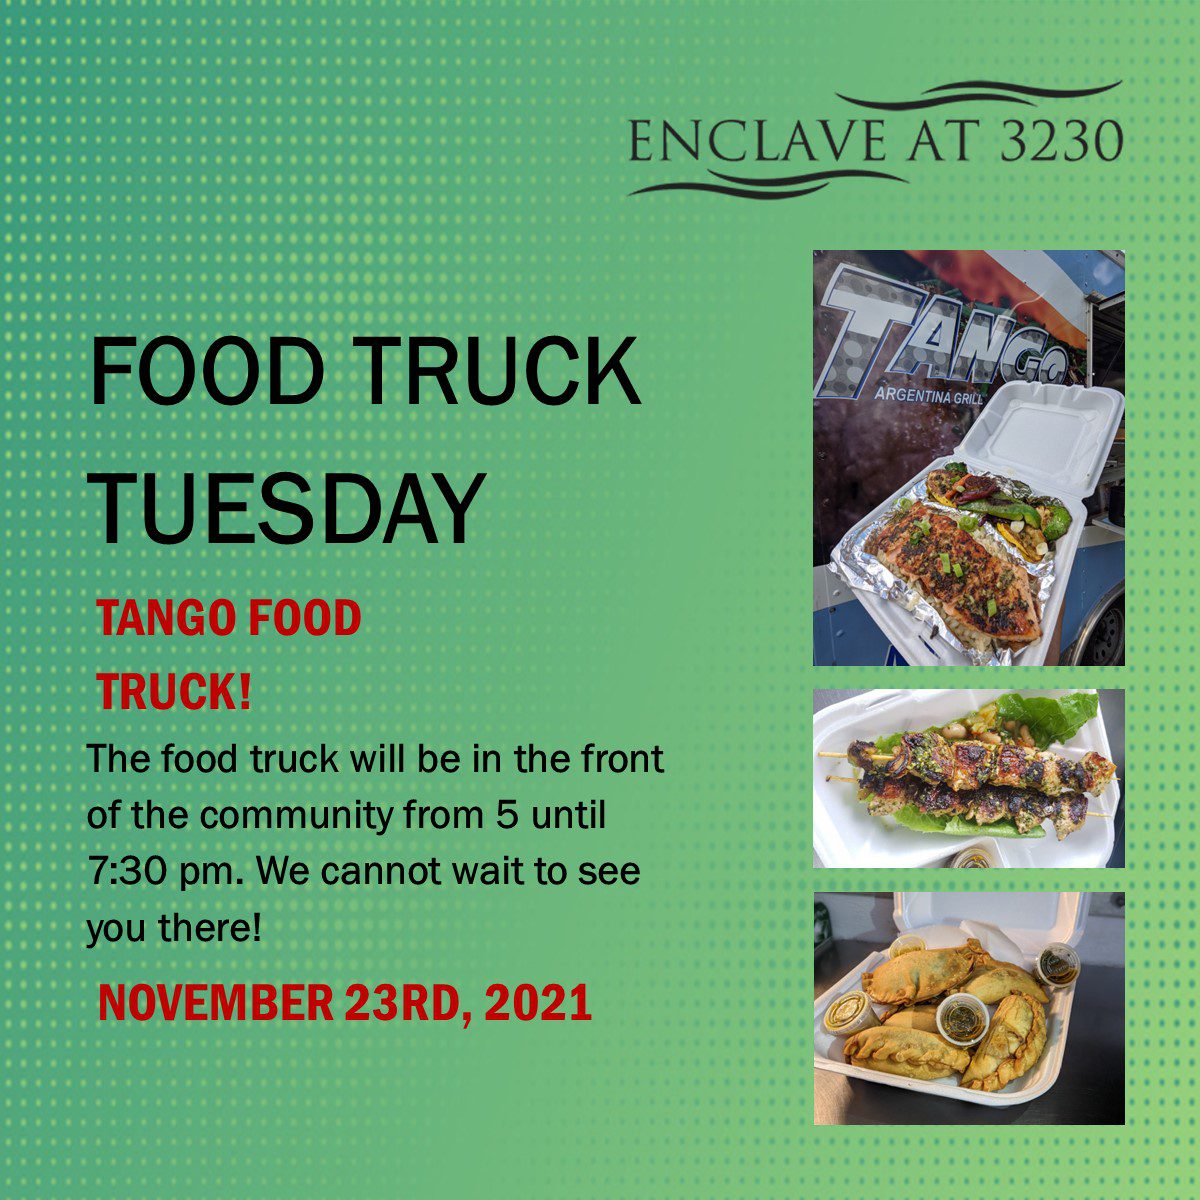 Tango Food Truck at Enclave at 3230!